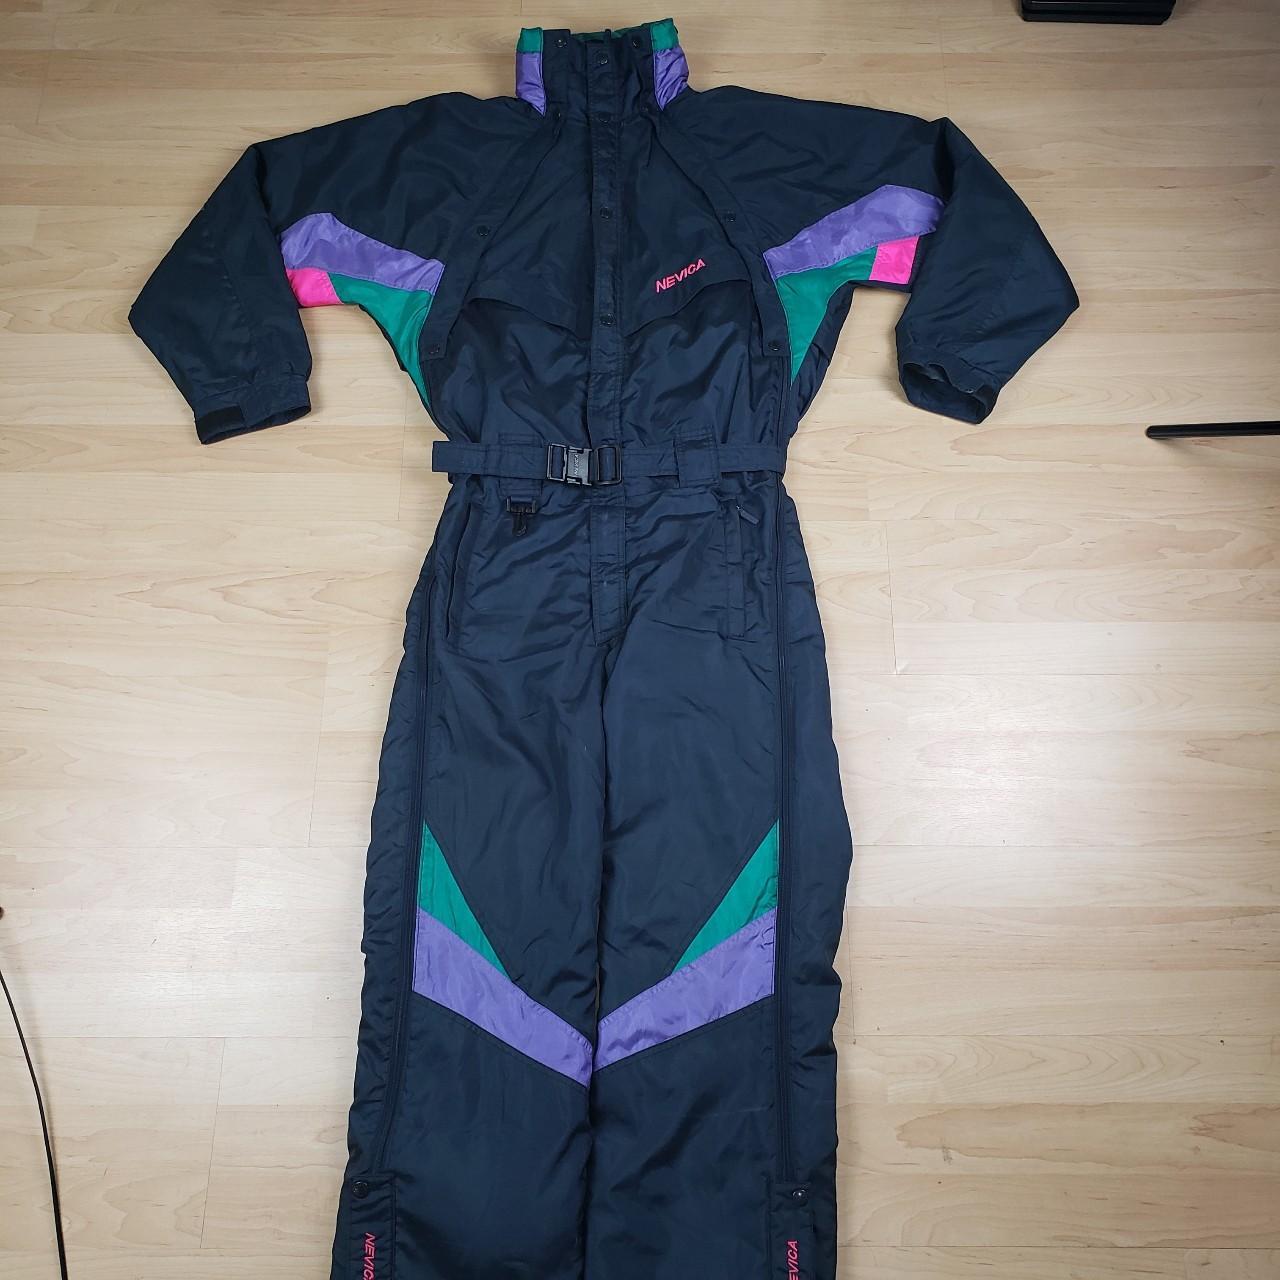 Product Image 1 - Nevica

1980s Full Ski Suit

Some damage

Mens: